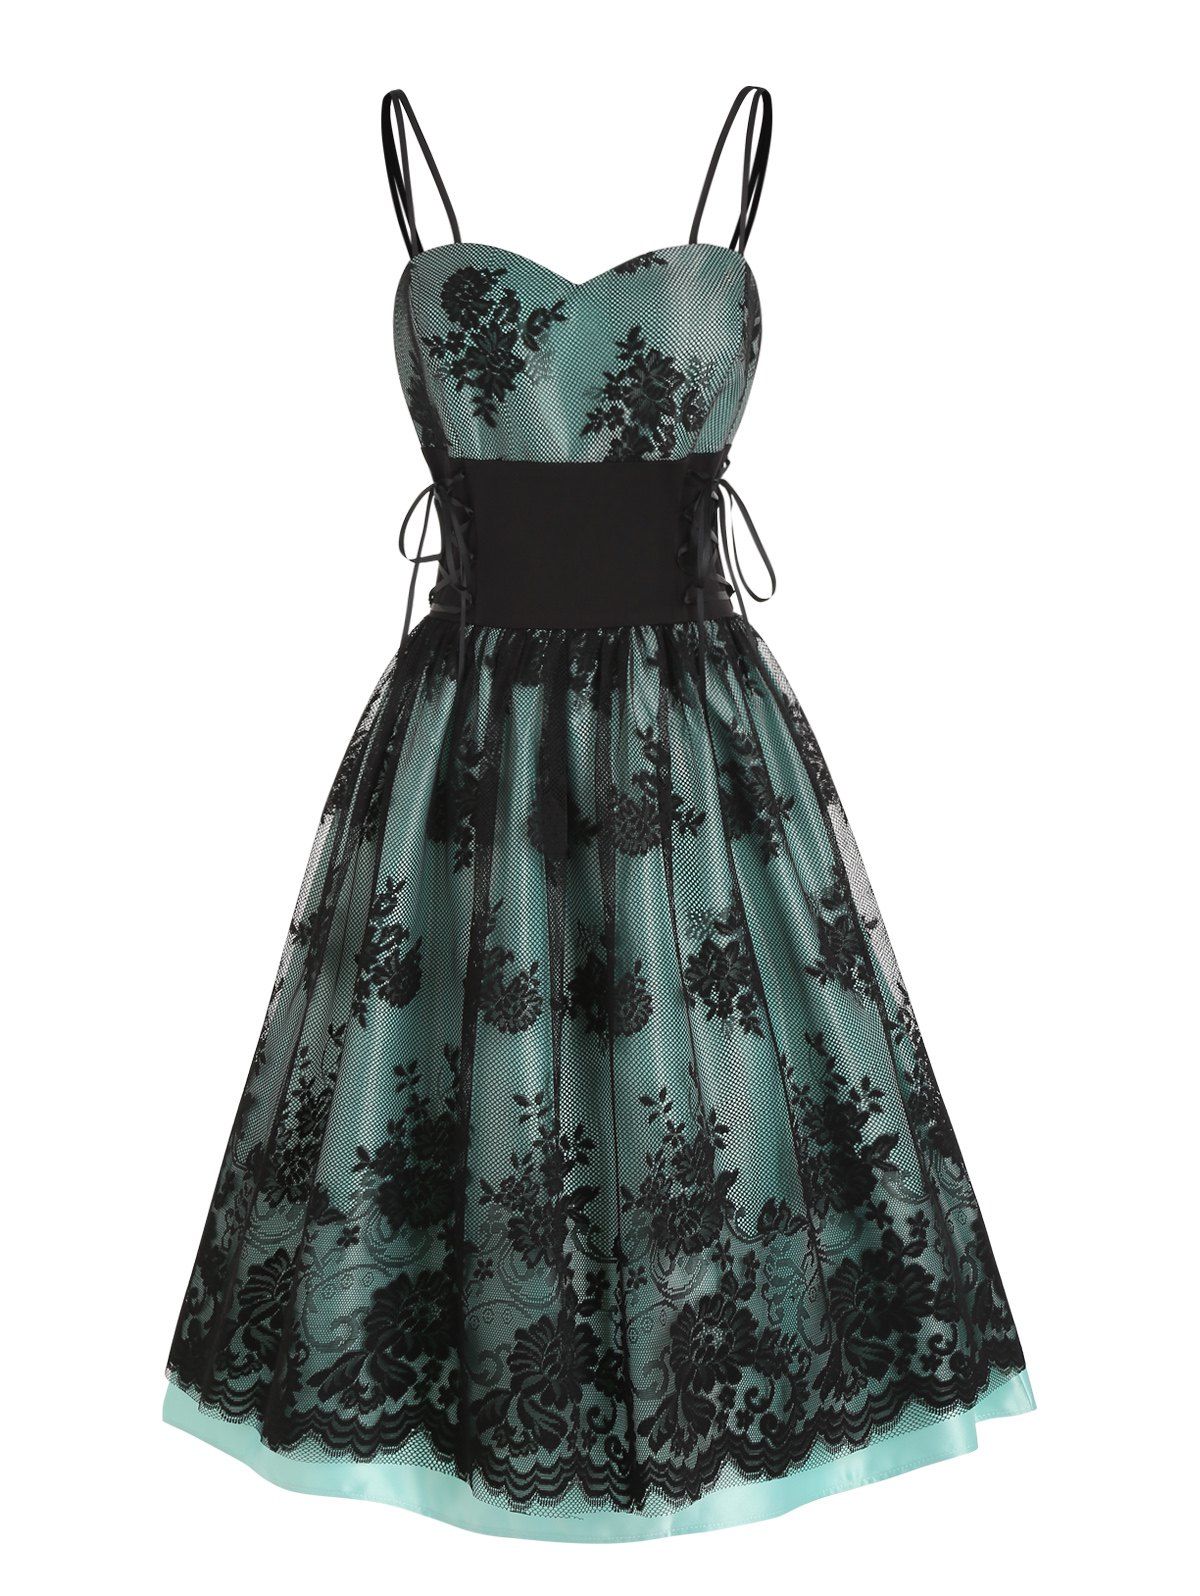 Party Dress Rose Lace Overlay Lace Up Sleeveless Spaghetti Strap High Waist A Line Midi Prom Dress - GREEN XL